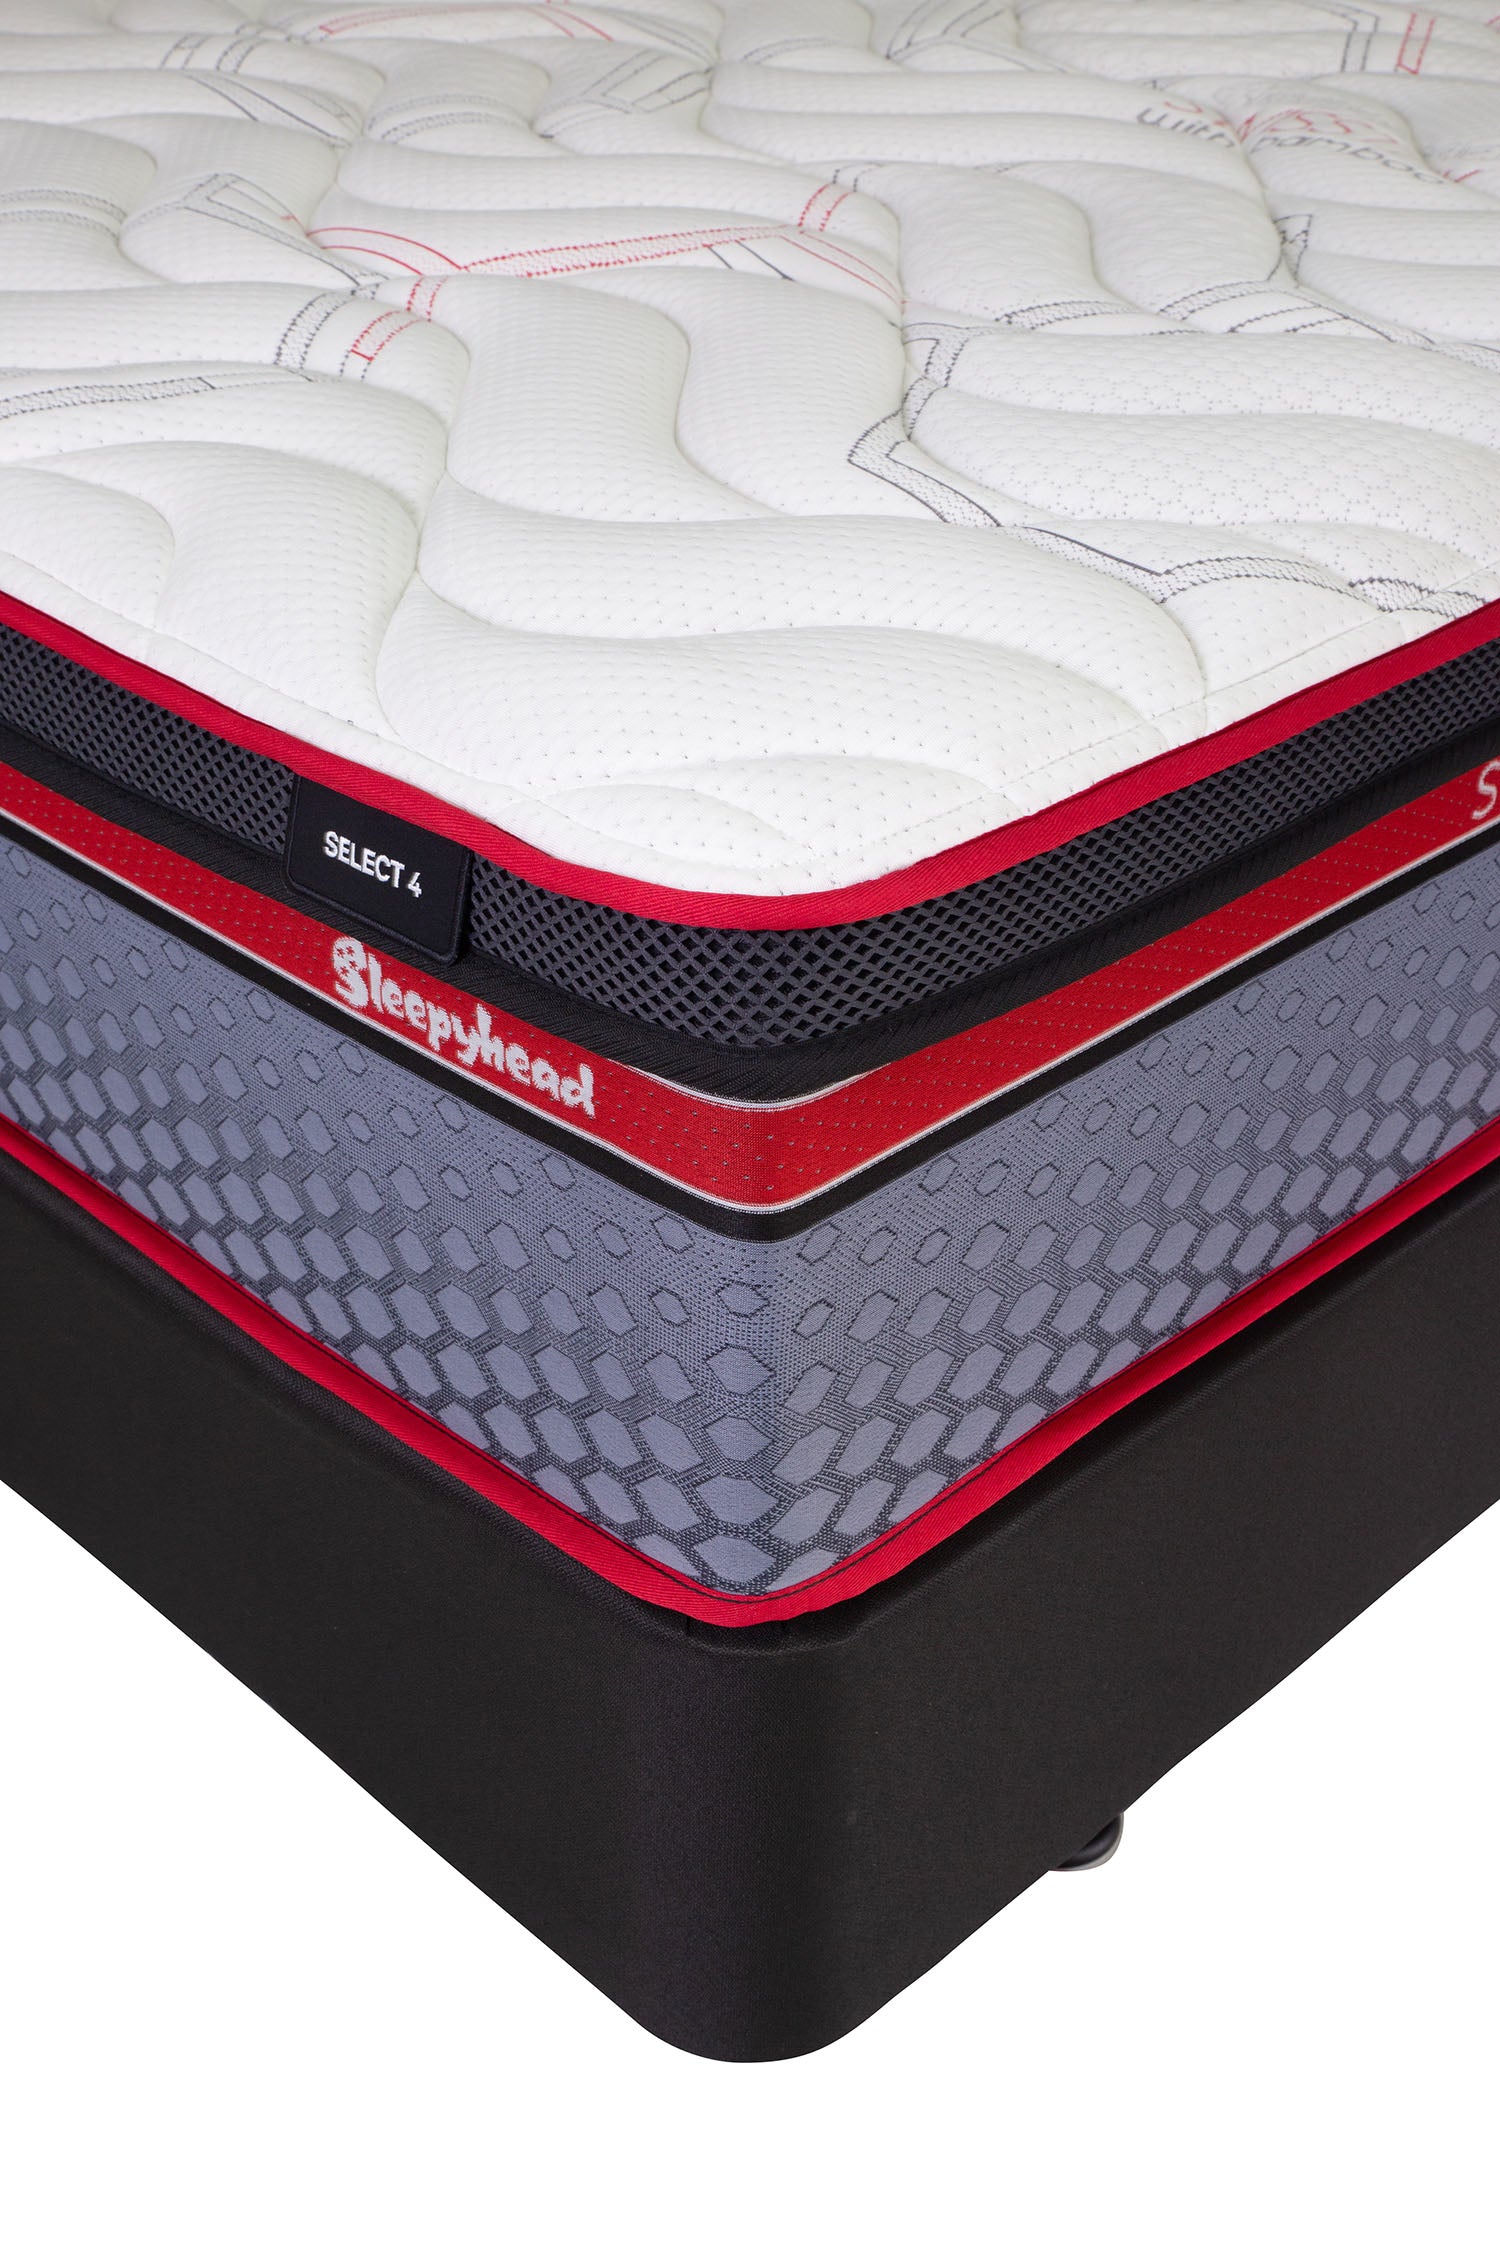 select4-super-king-mattress-3